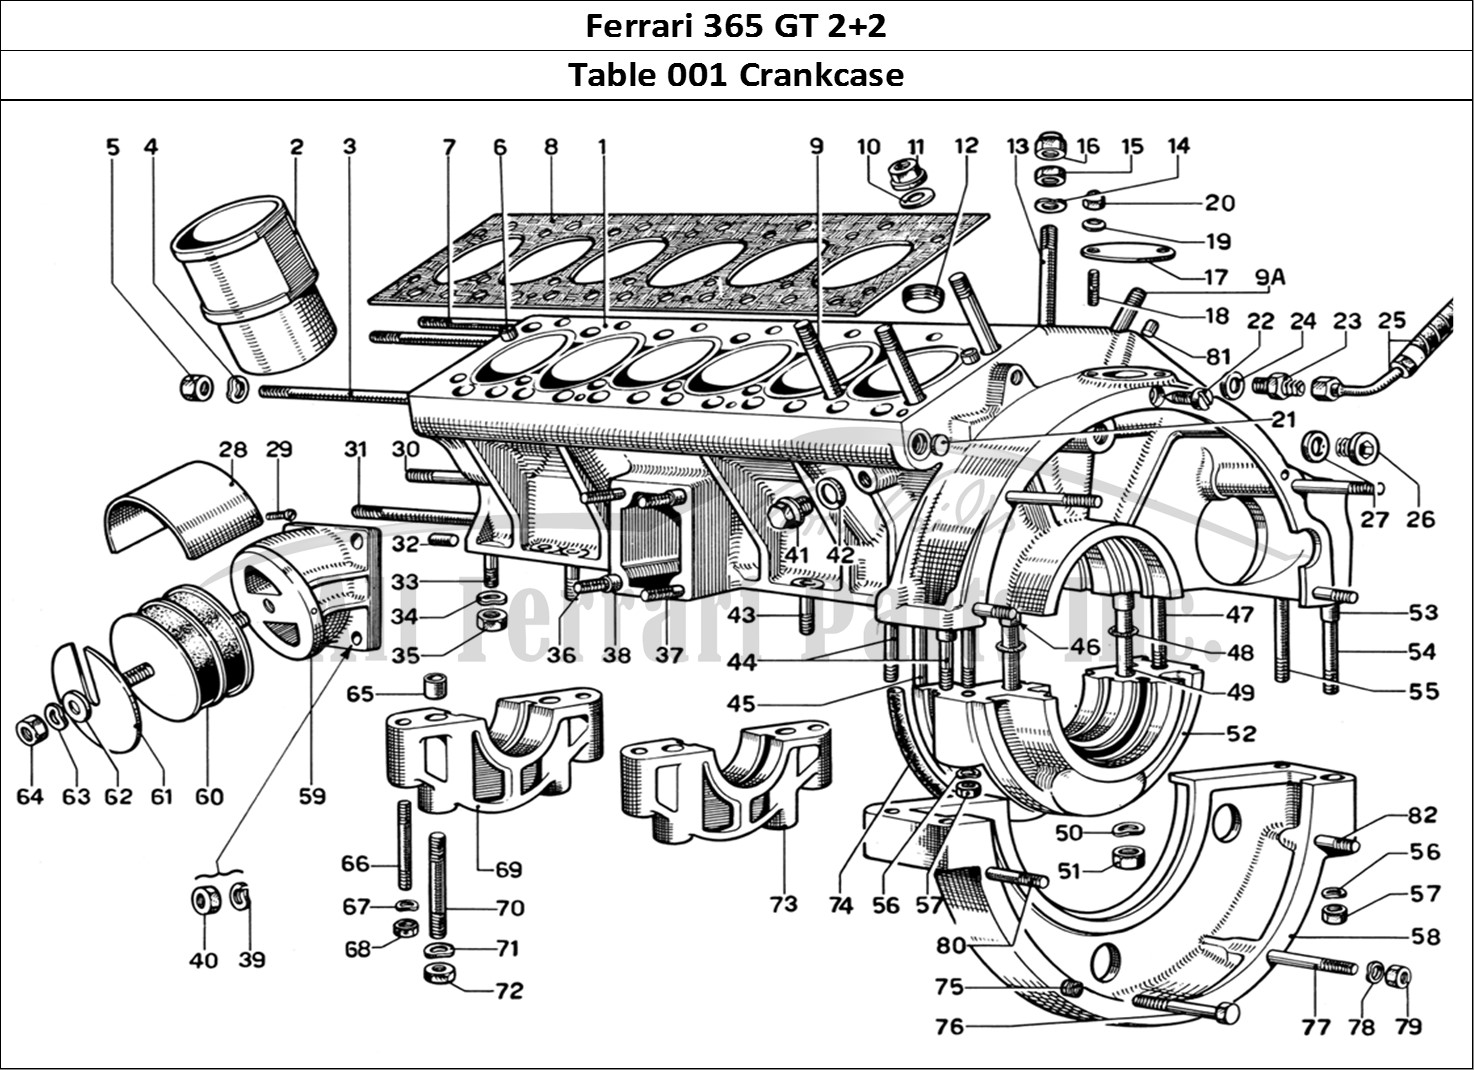 Ferrari Parts Ferrari 365 GT 2+2 (Mechanical) Page 001 Crankcase